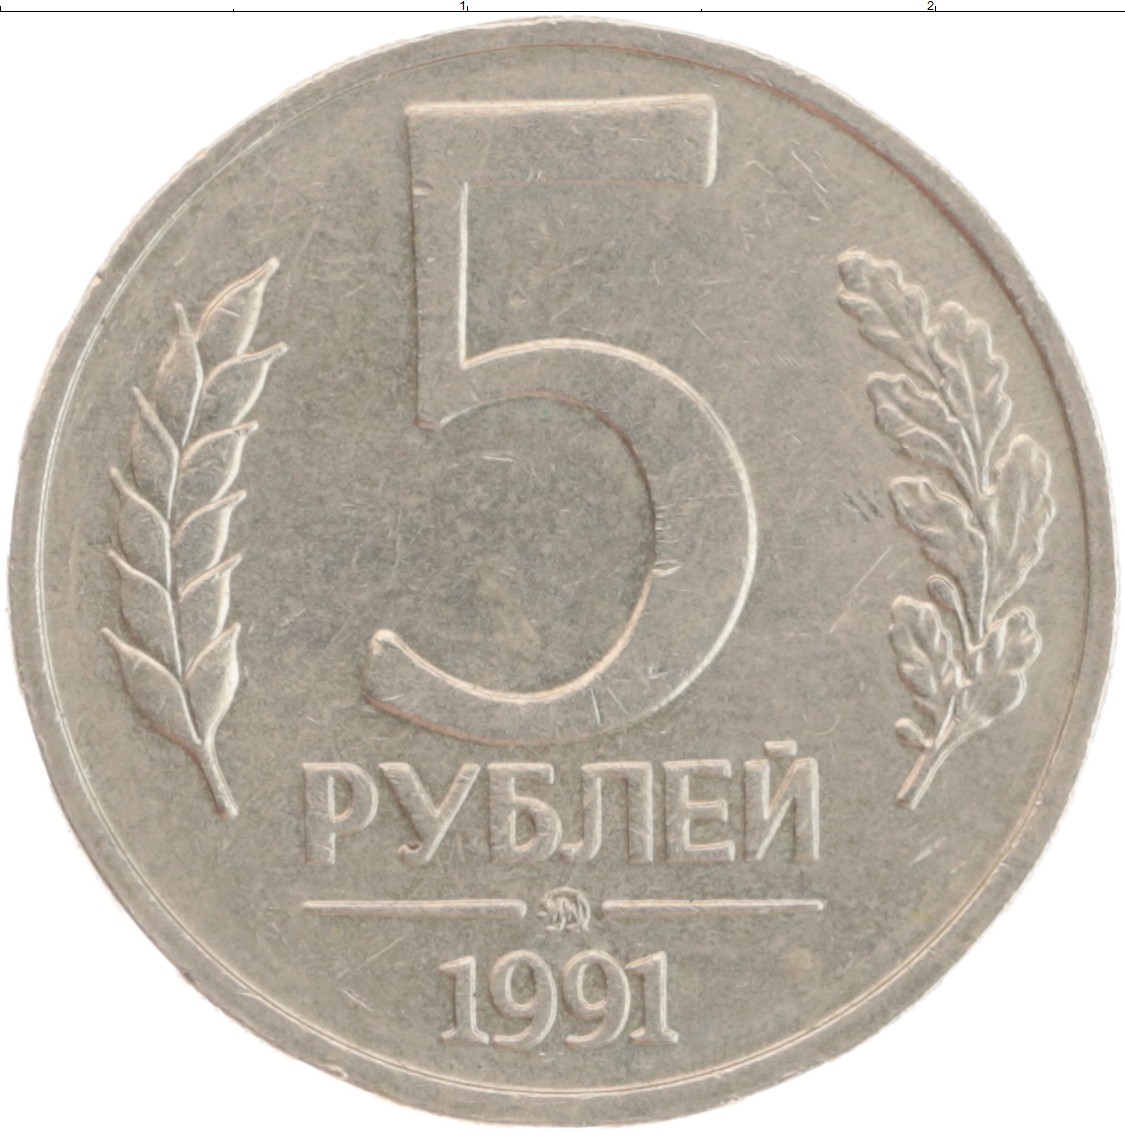 3 рубля 1991 год. 5 Рублей 1991 ММД. 5 Рублей 1991 ЛМД. СССР 5 рублей 1991 (ЛМД). Монета 5 рублей 1991 ММД.